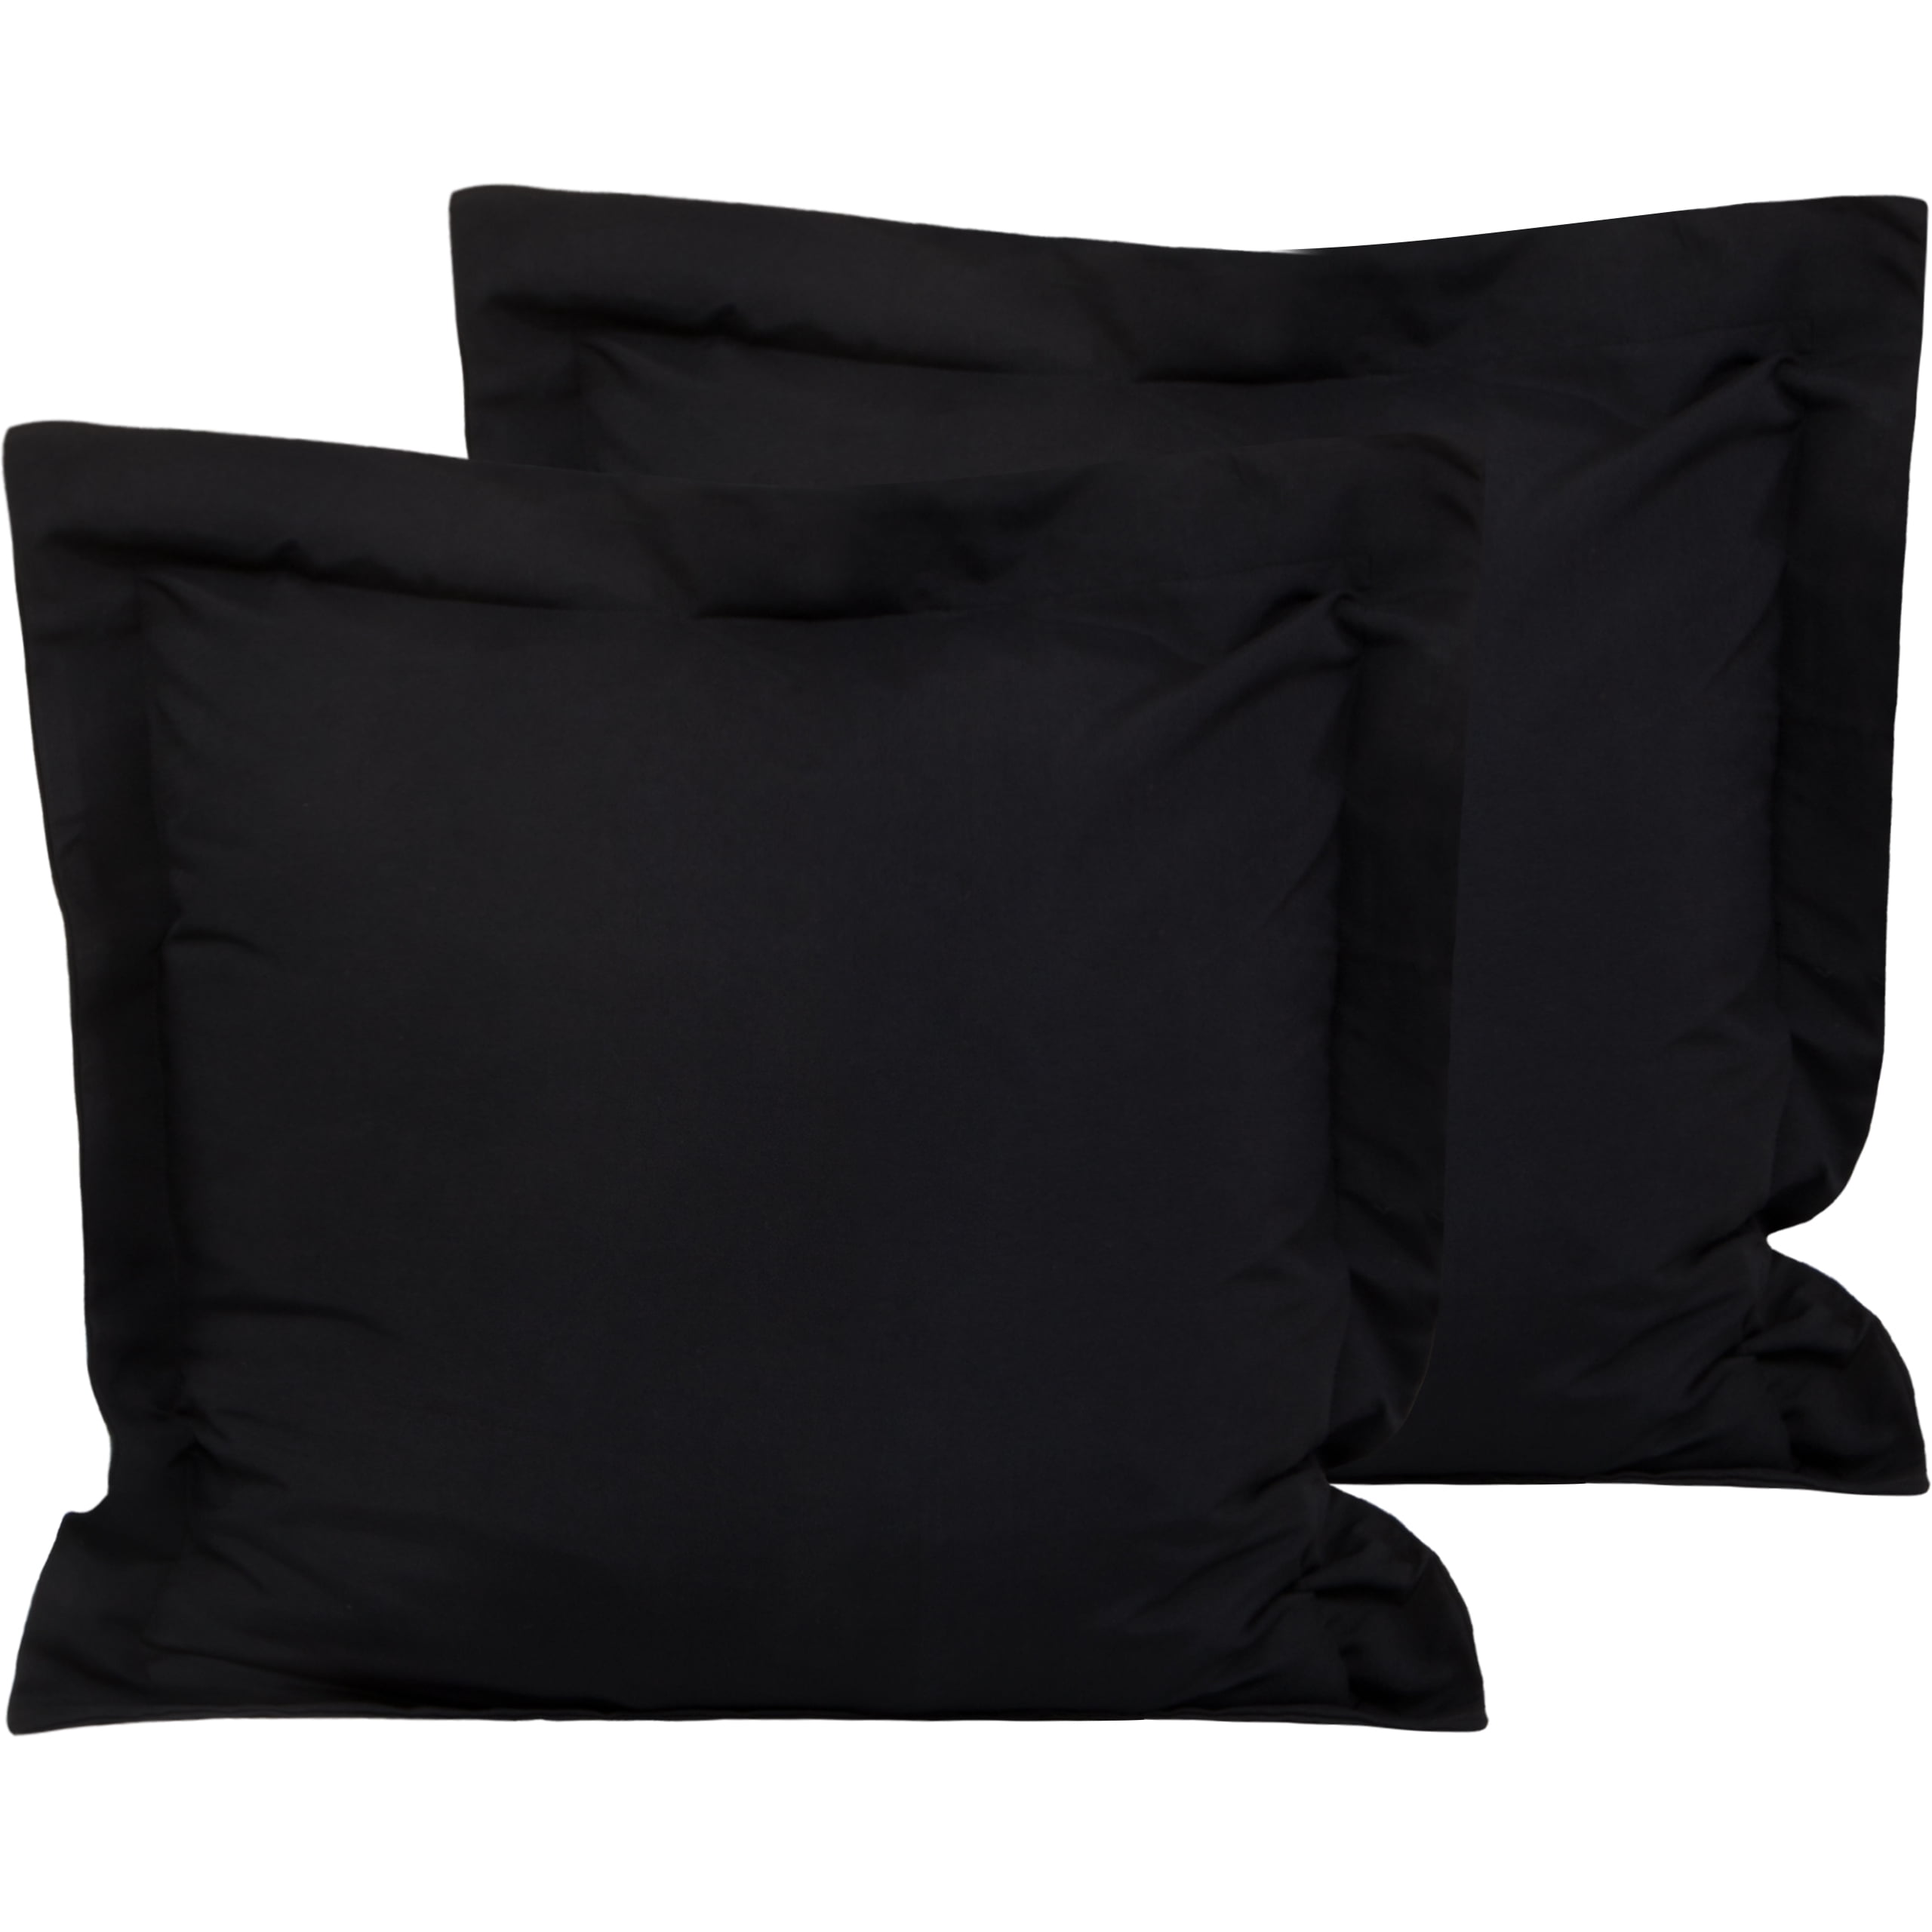 FLXXIE 2 Pack Microfiber Euro Pillow Shams, Ultra Soft European Throw ...